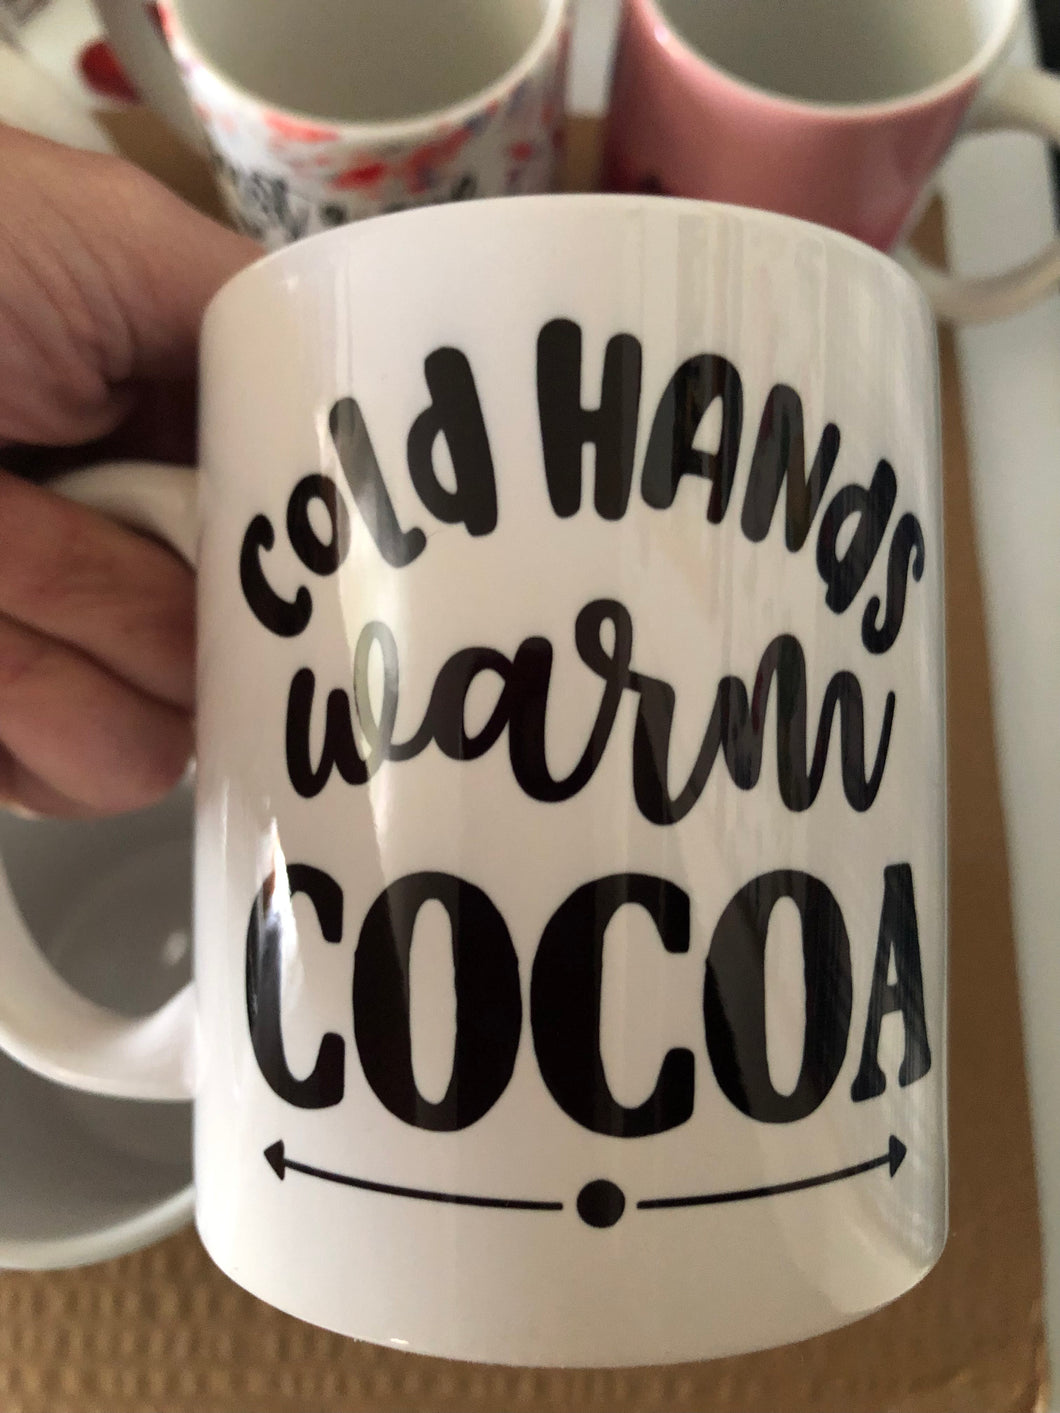 Cold hands warm cocoa mug